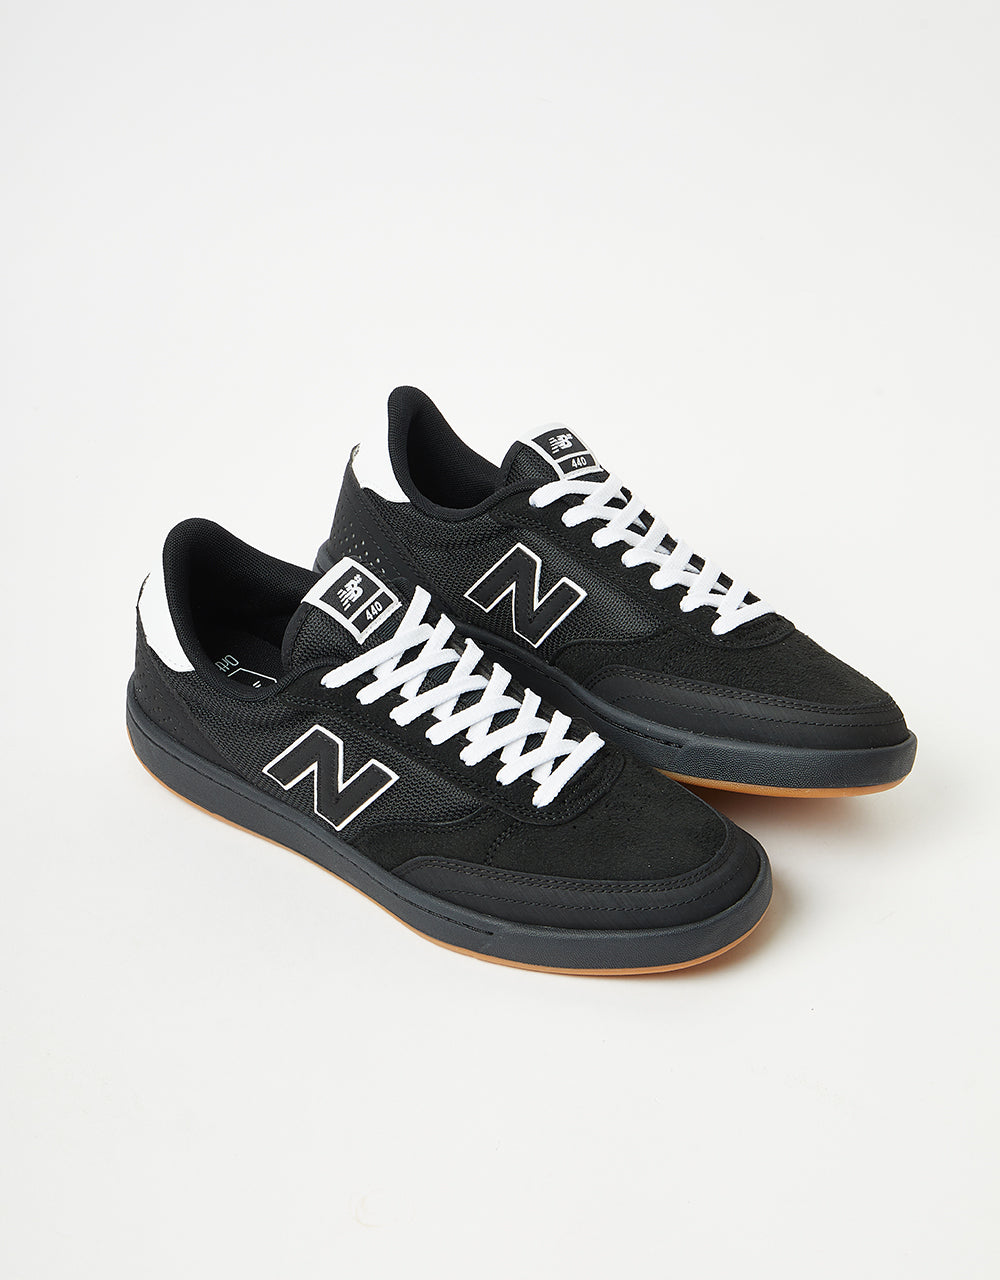 New Balance Numeric 440 Skate Shoes - Black/White